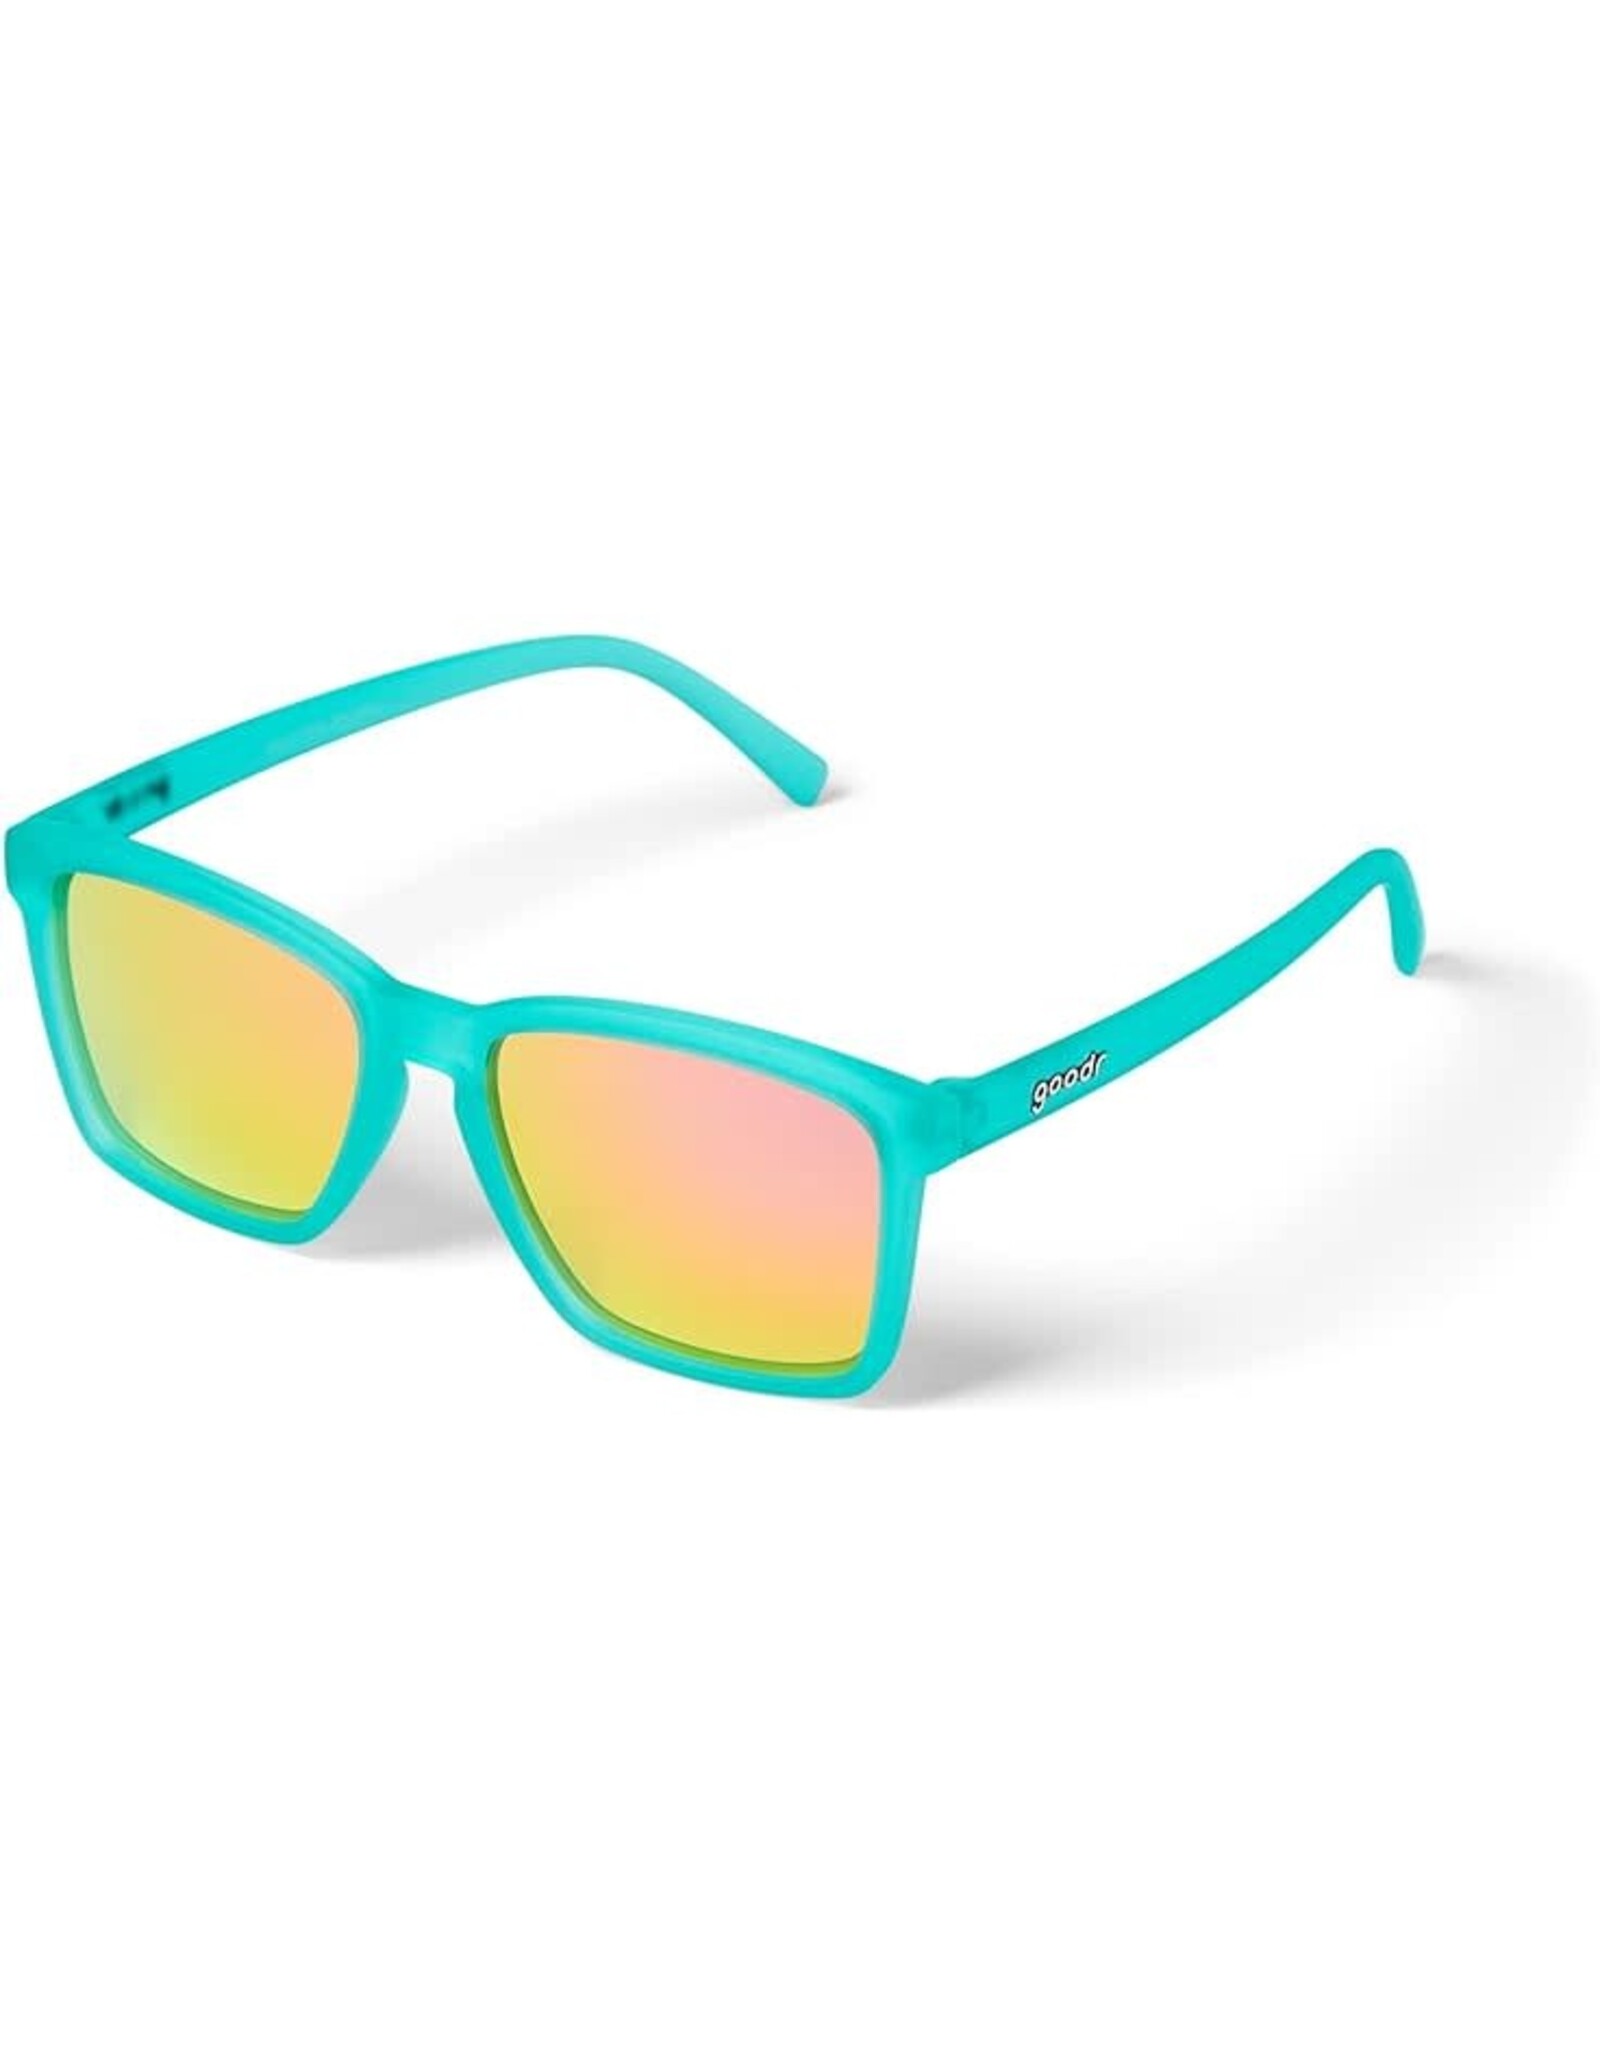 Goodr Goodr Short With Benefits Sunglasses